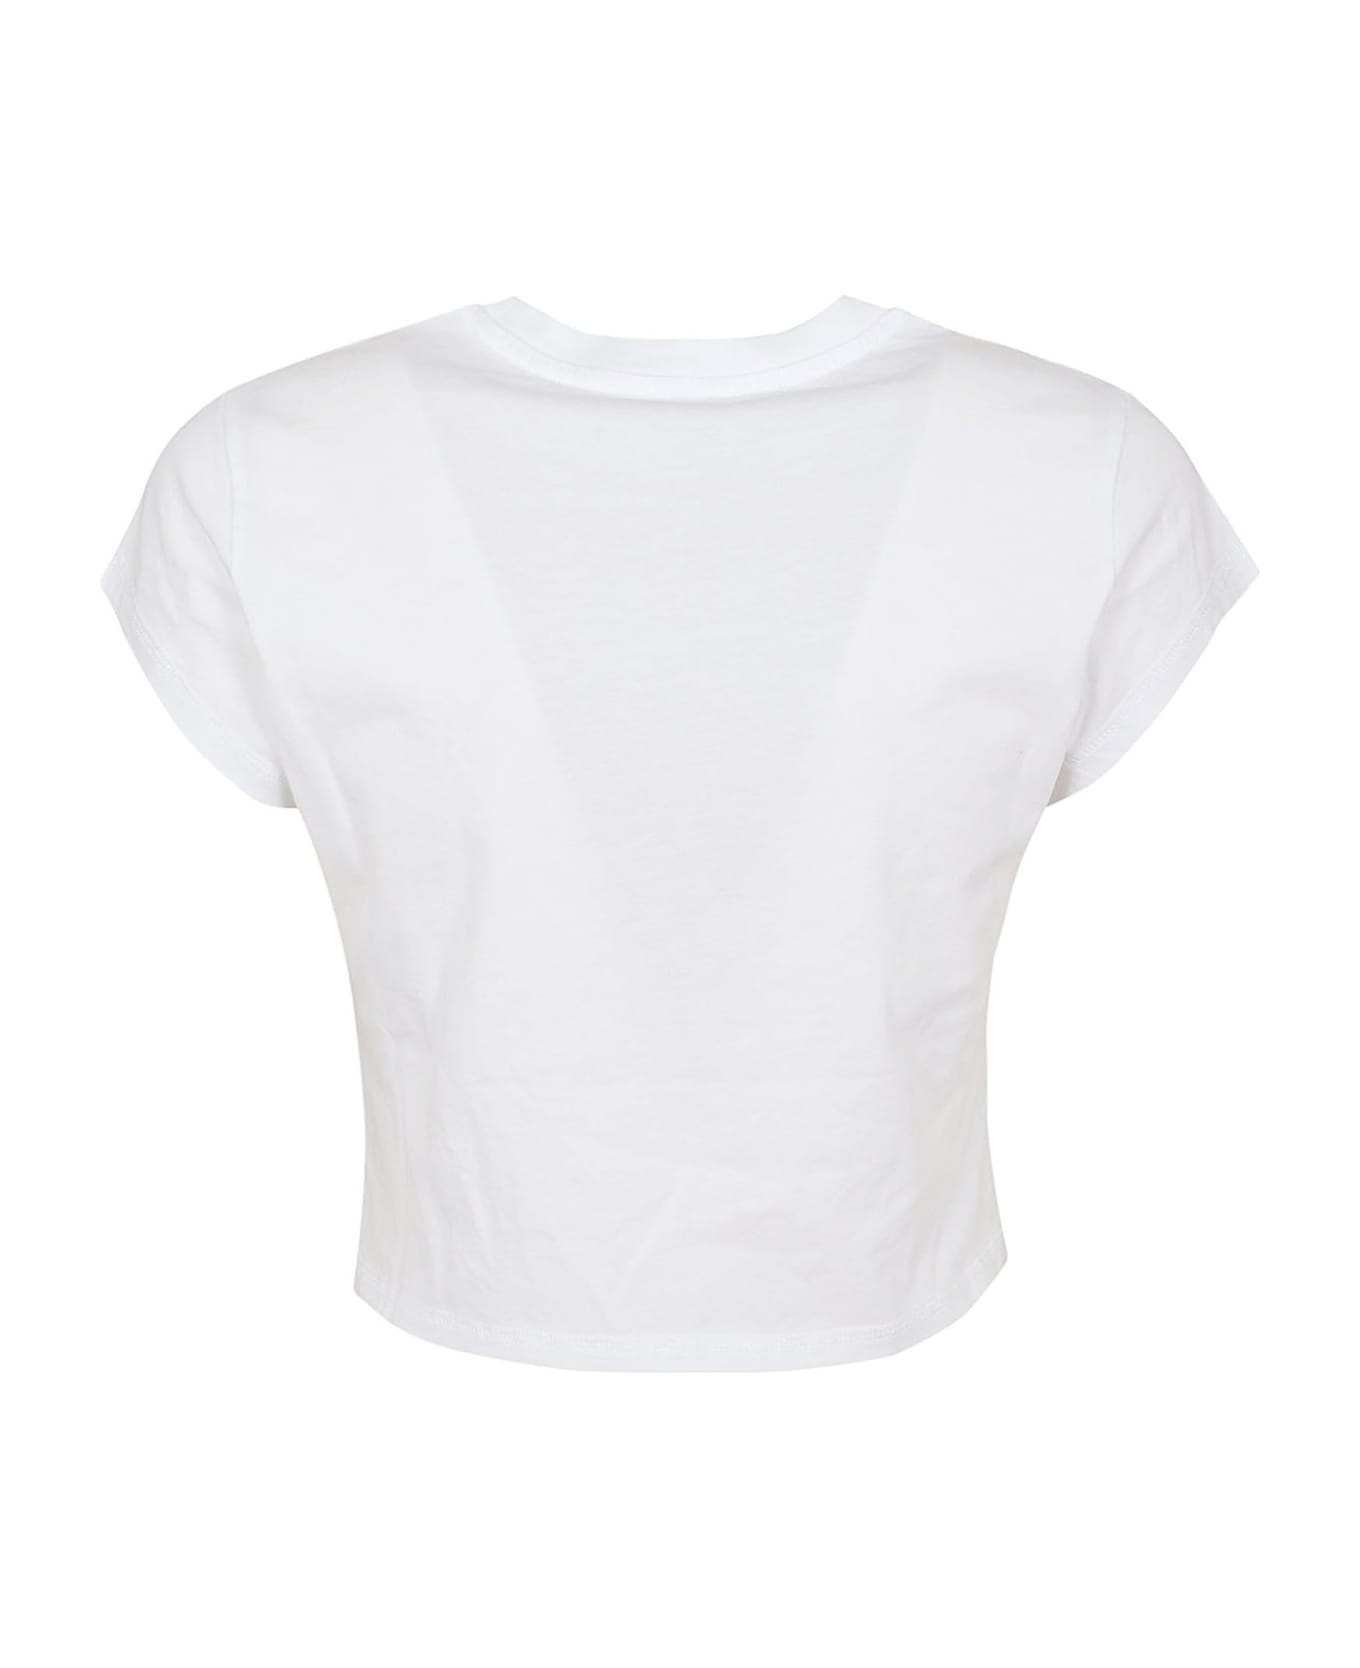 Kenzo Boke Crest T-shirt - White